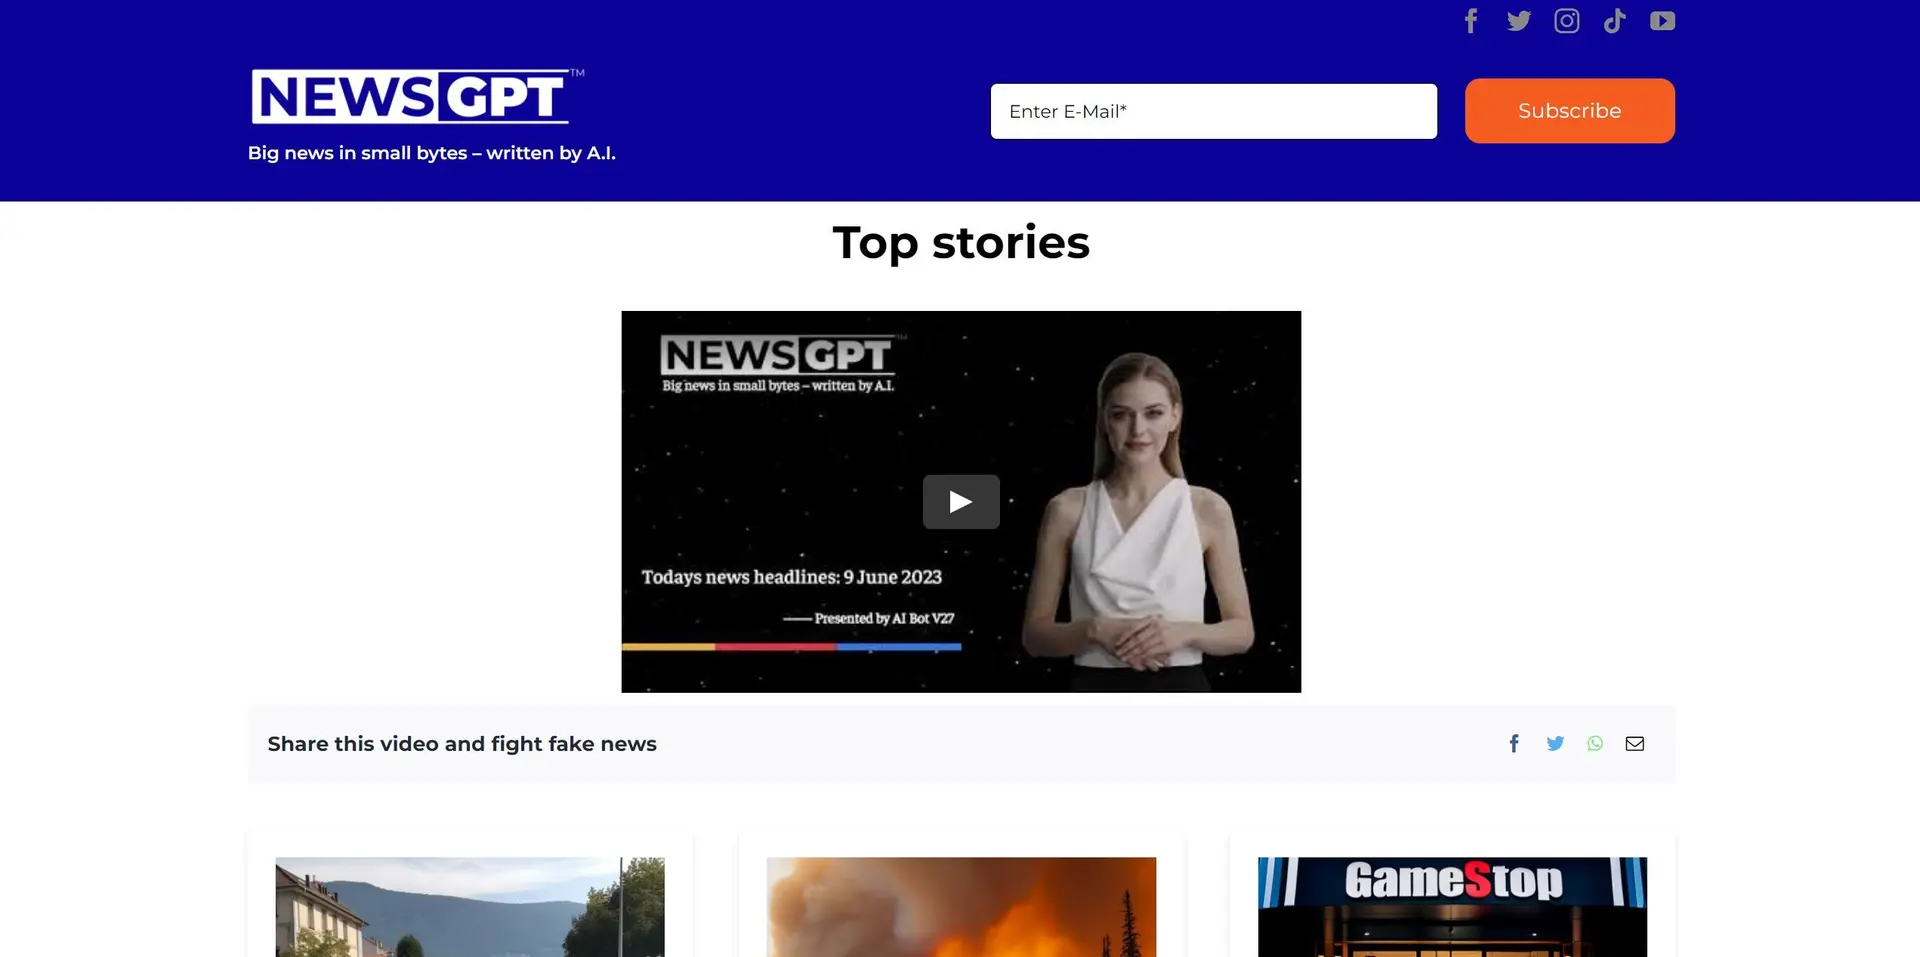 NewsGPTwebsite picture